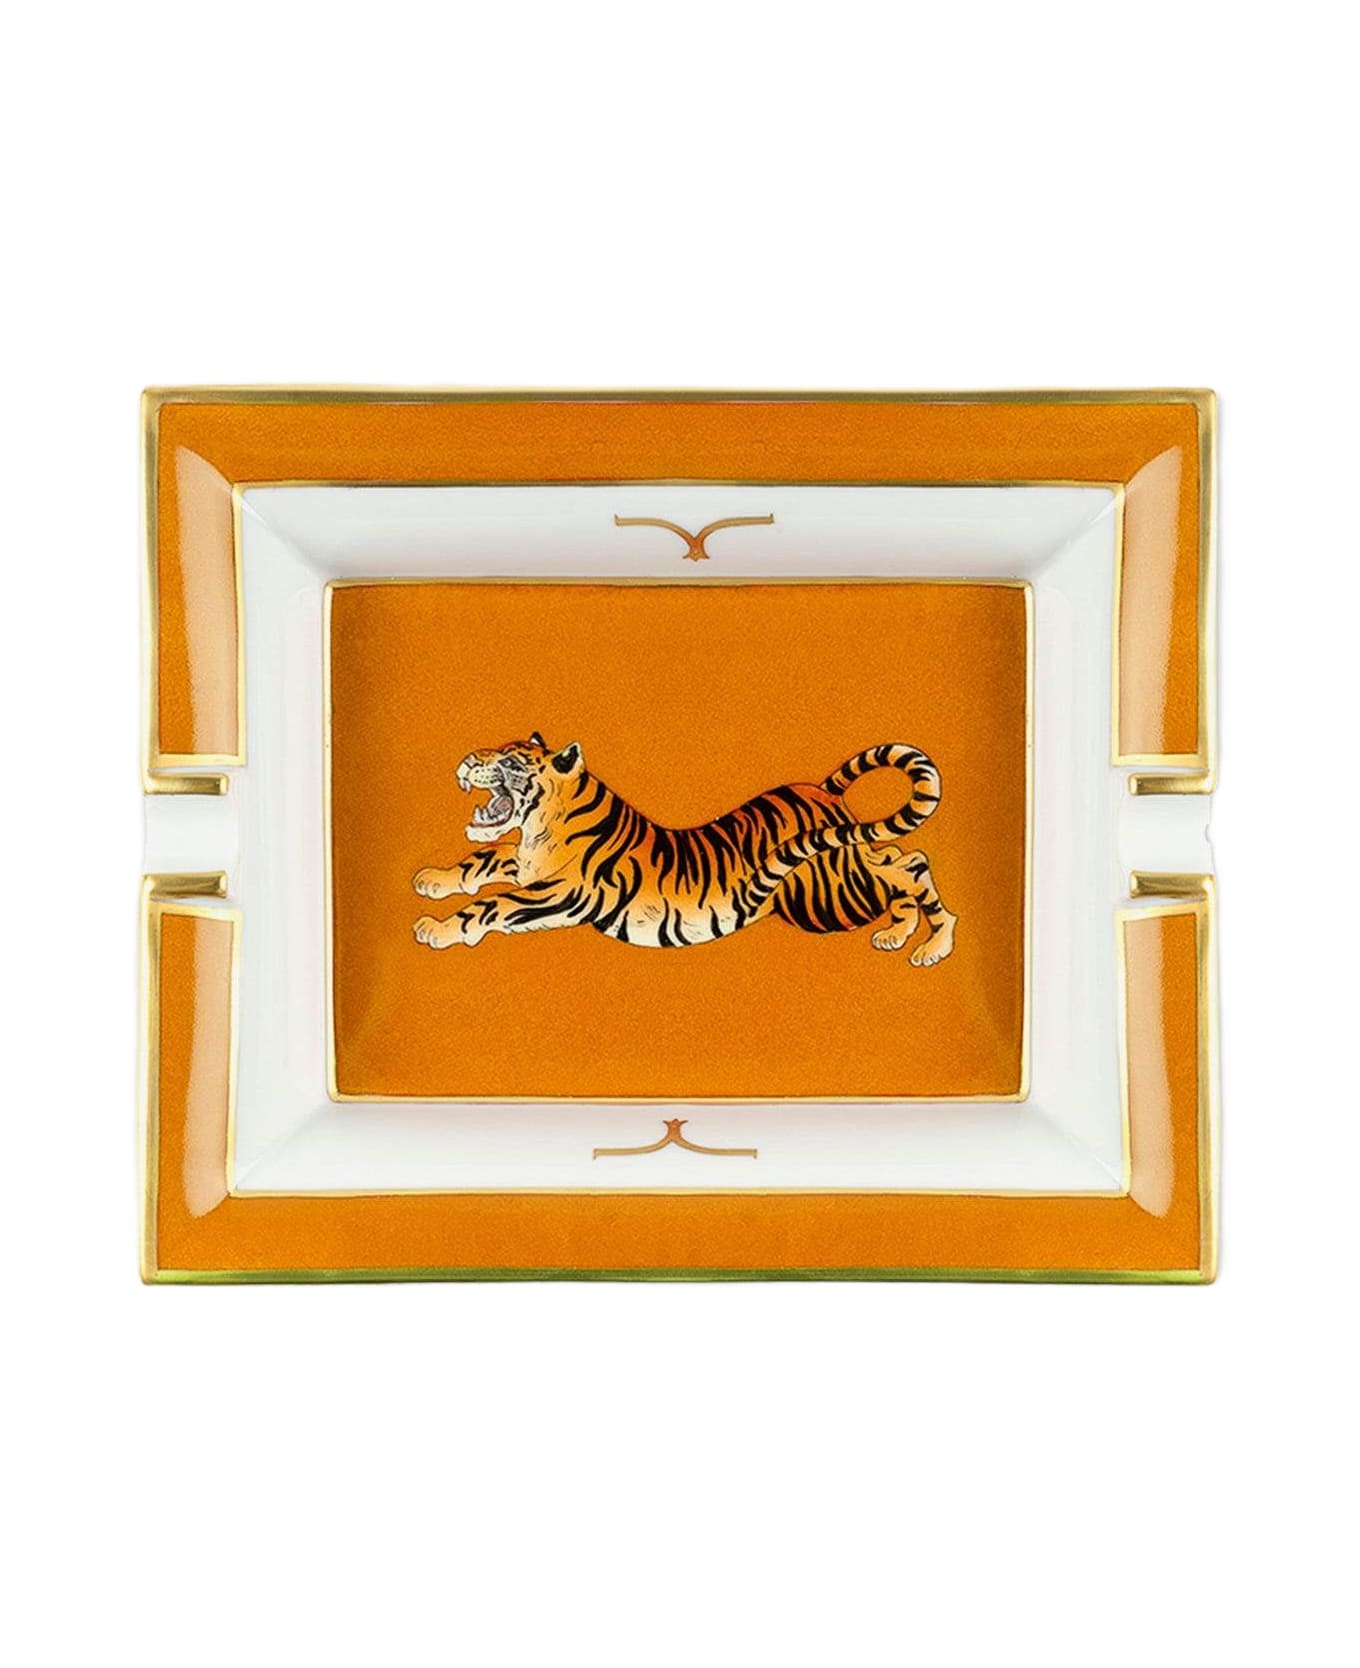 Larusmiani Ashtray 'tigre' Tray - Orange